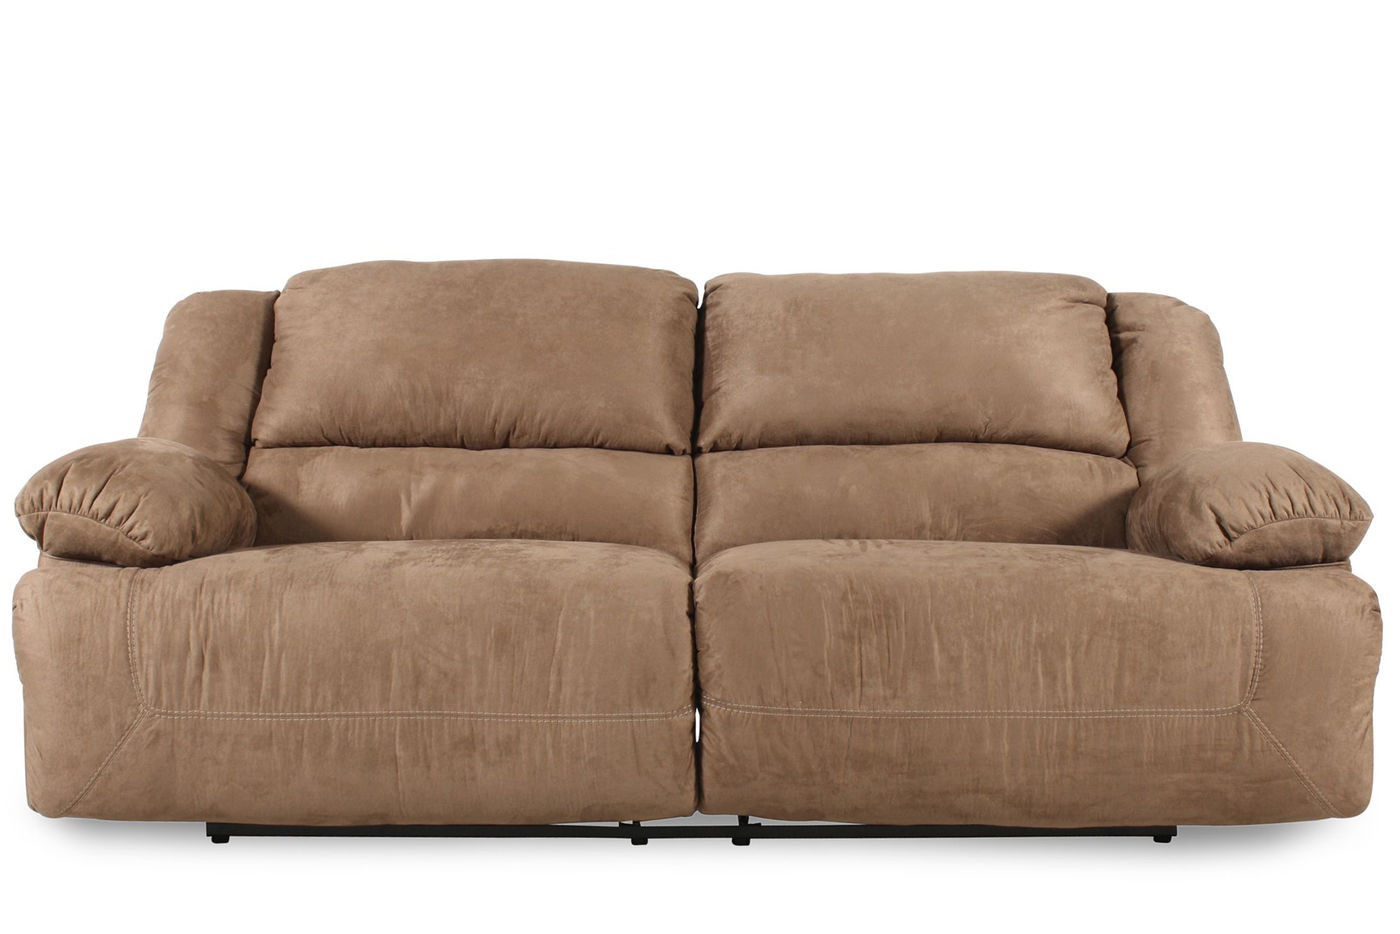 Best ideas about Ashley Reclining Sofa
. Save or Pin Ashley Hogan Mocha Two Seat Reclining Sofa Now.